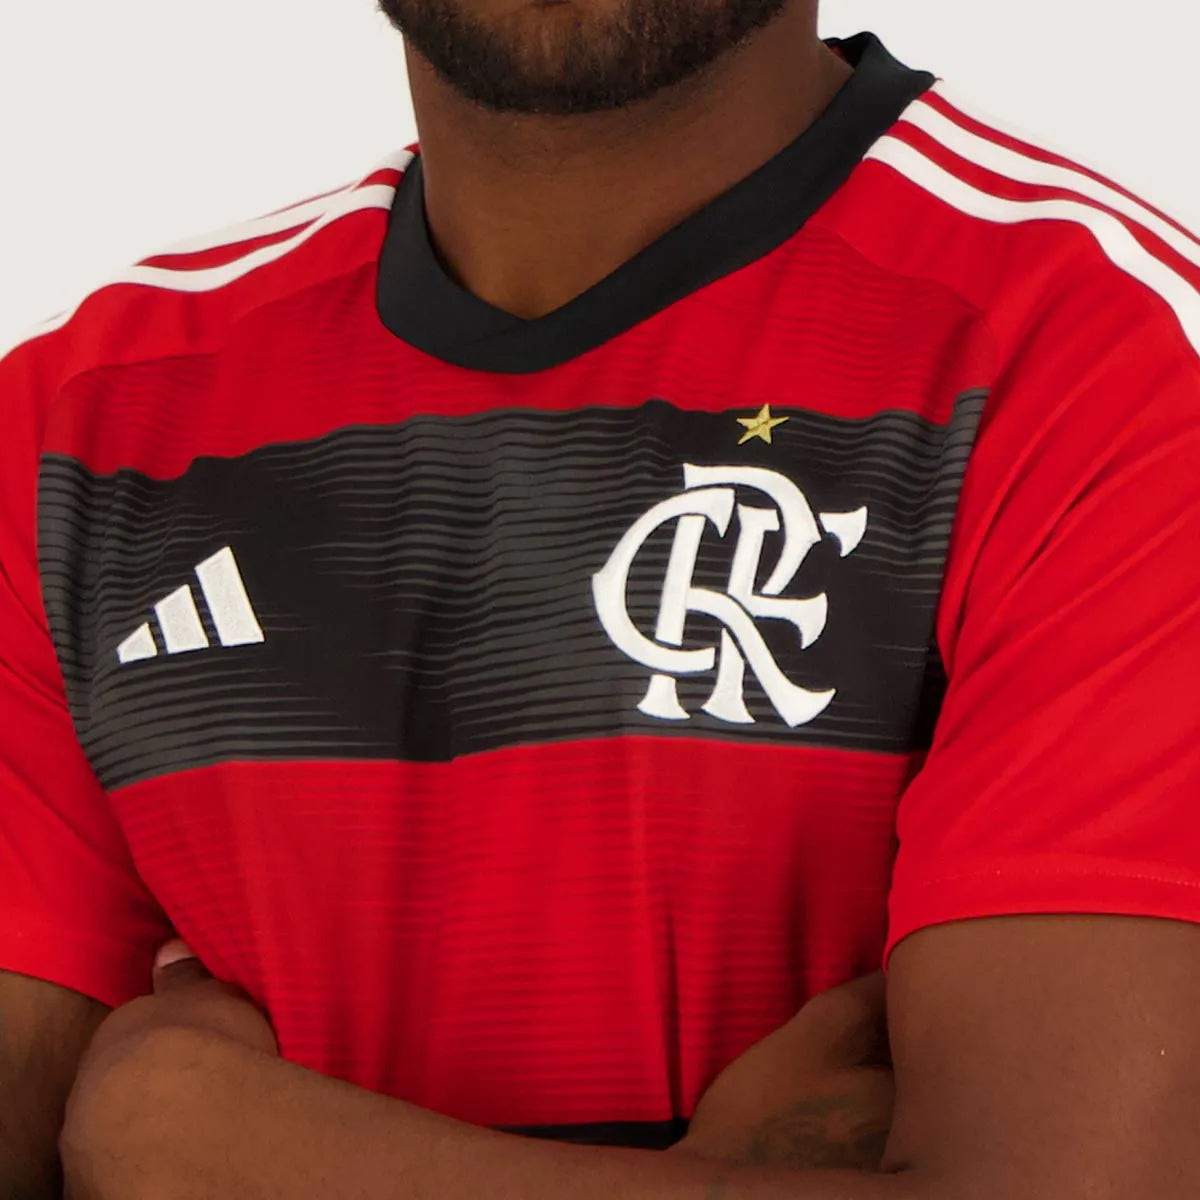 Camisa Adidas Flamengo 2023/24 I Gabi Nº 10